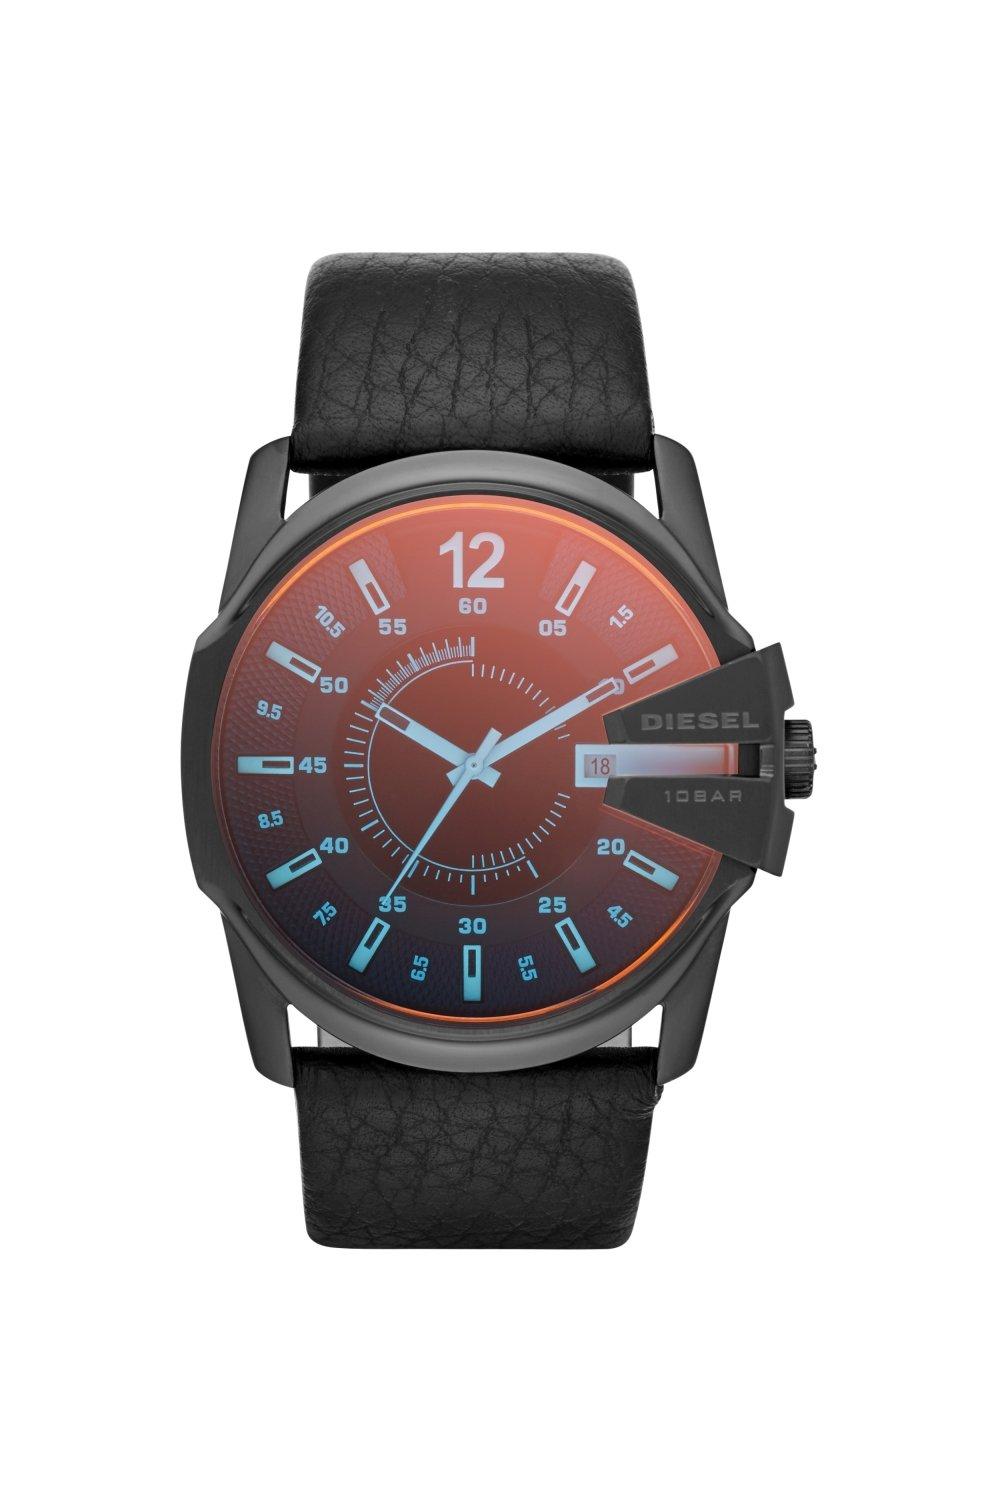 Chief Plated Stainless Steel Fashion Analogue Quartz Watch - Dz1657